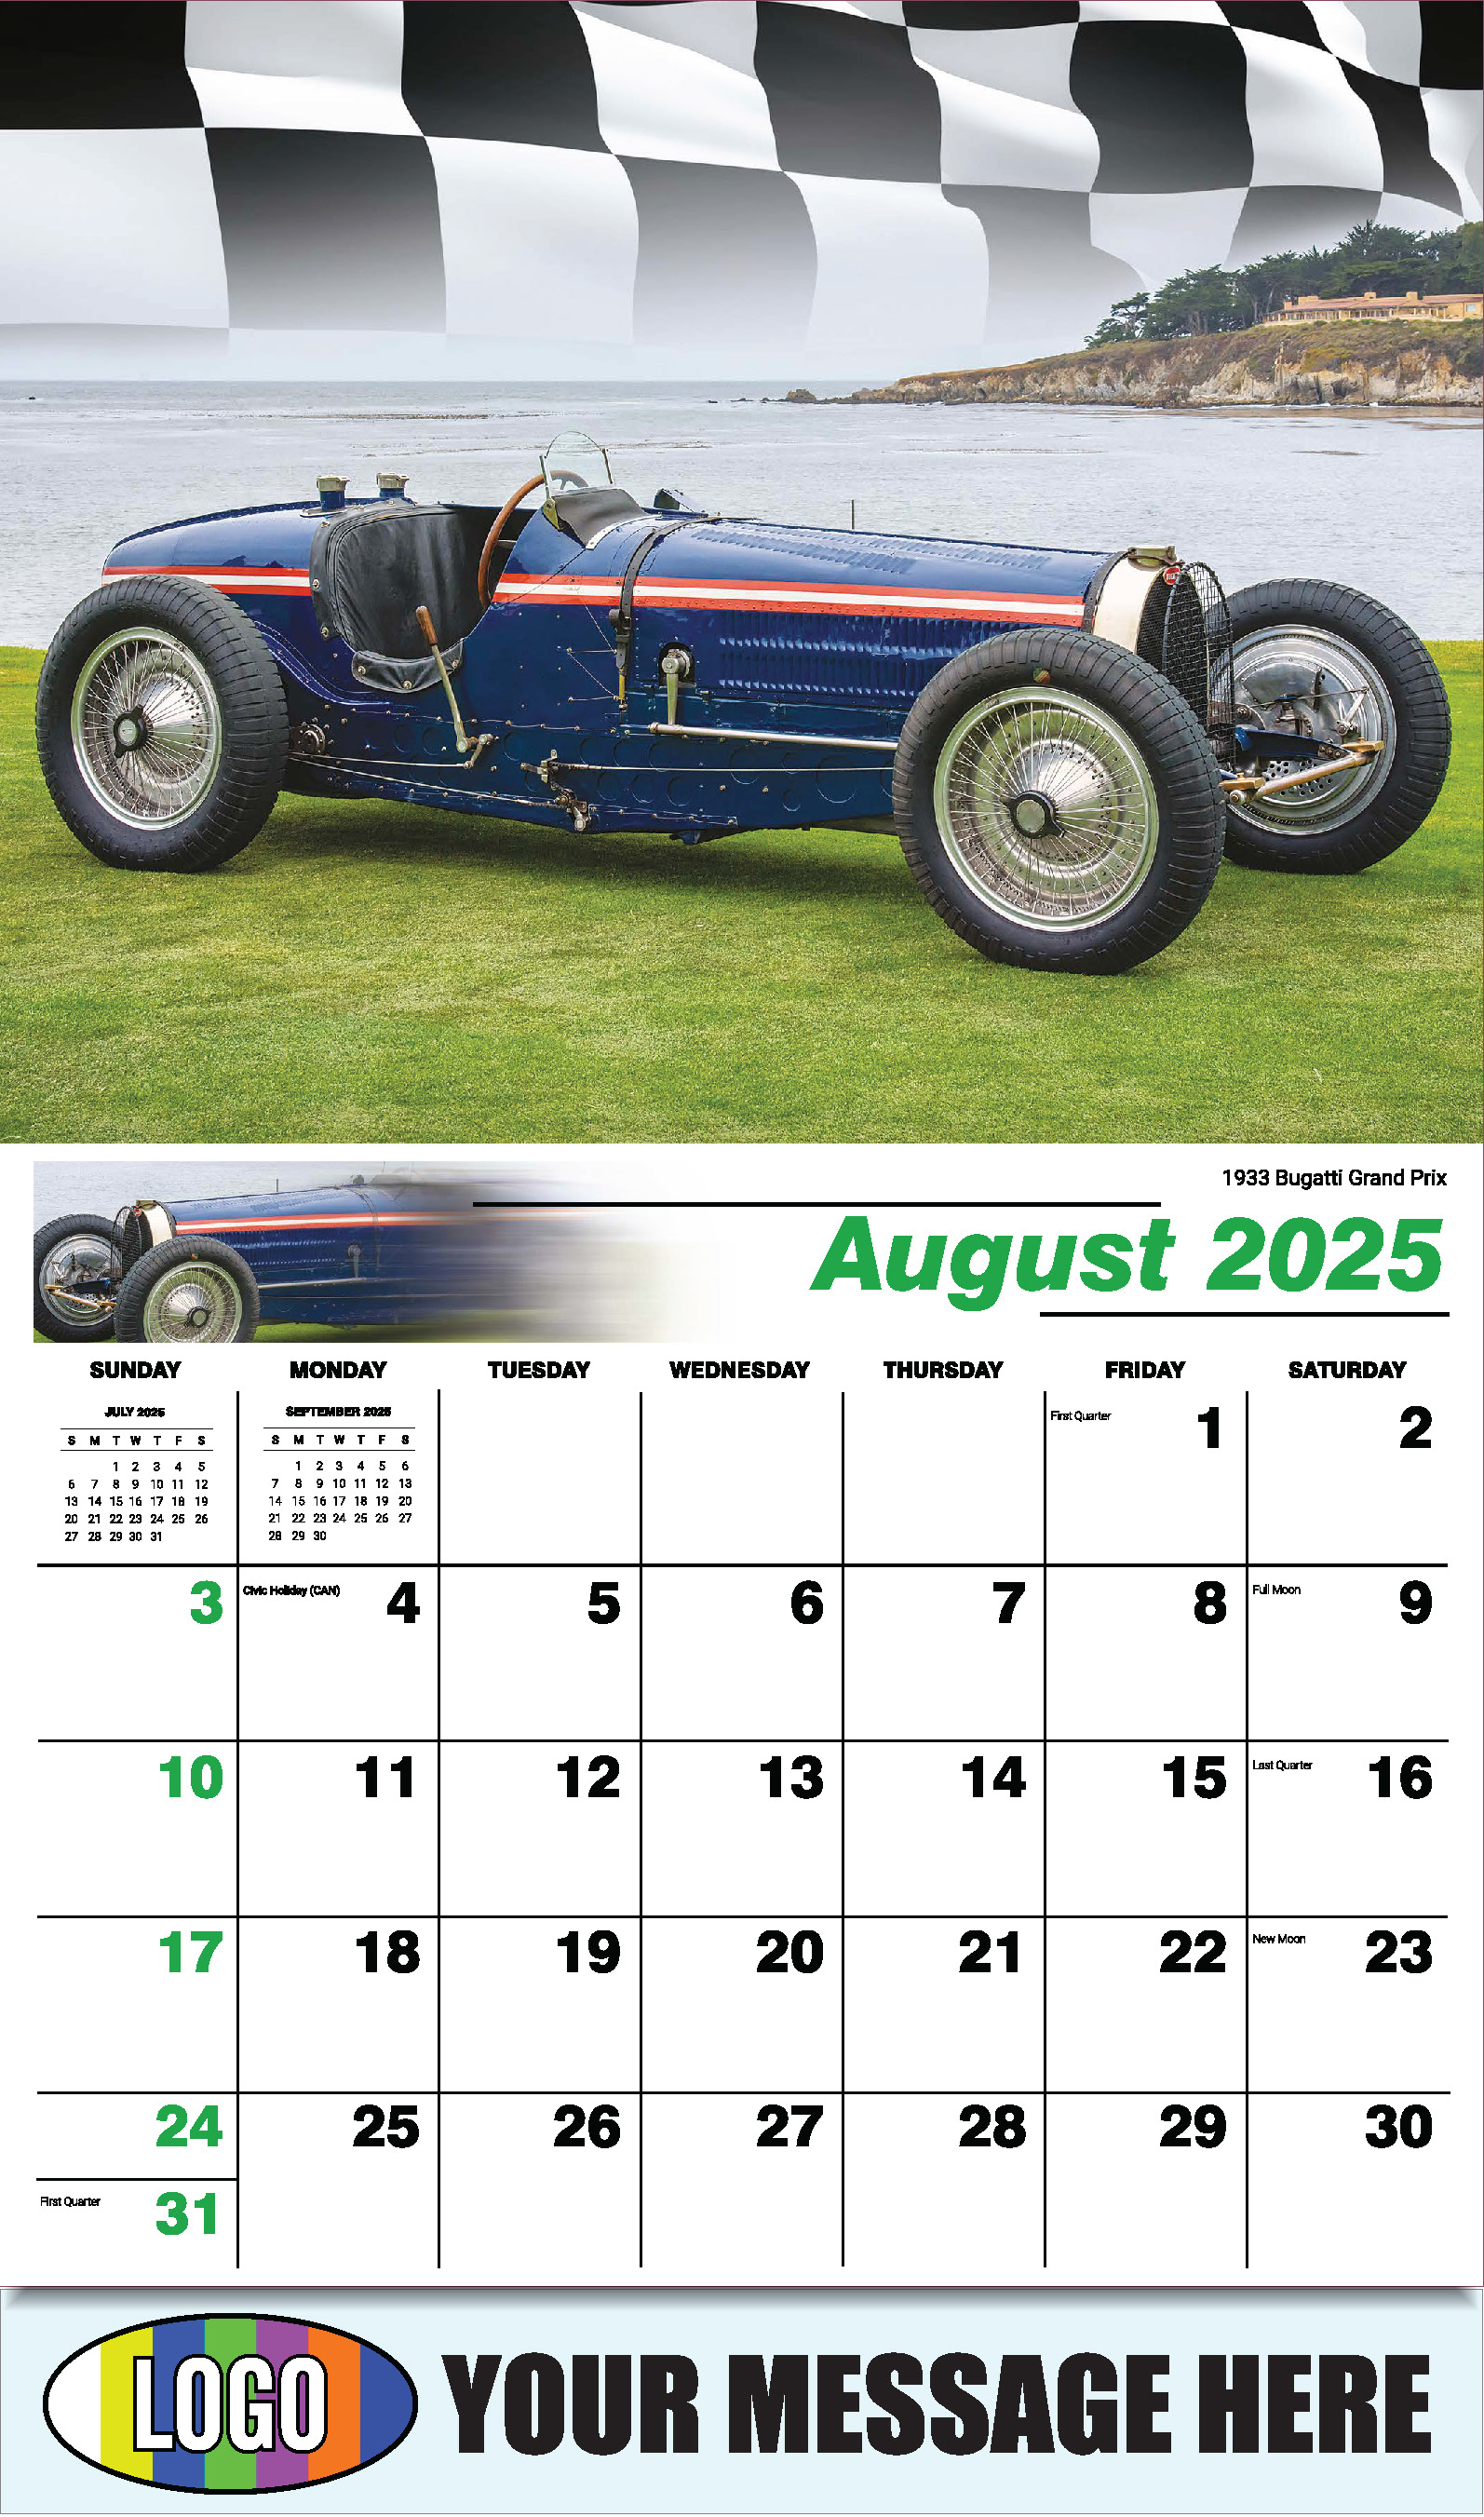 Road Warriors 2025 Automotive Business Promo Wall Calendar - August